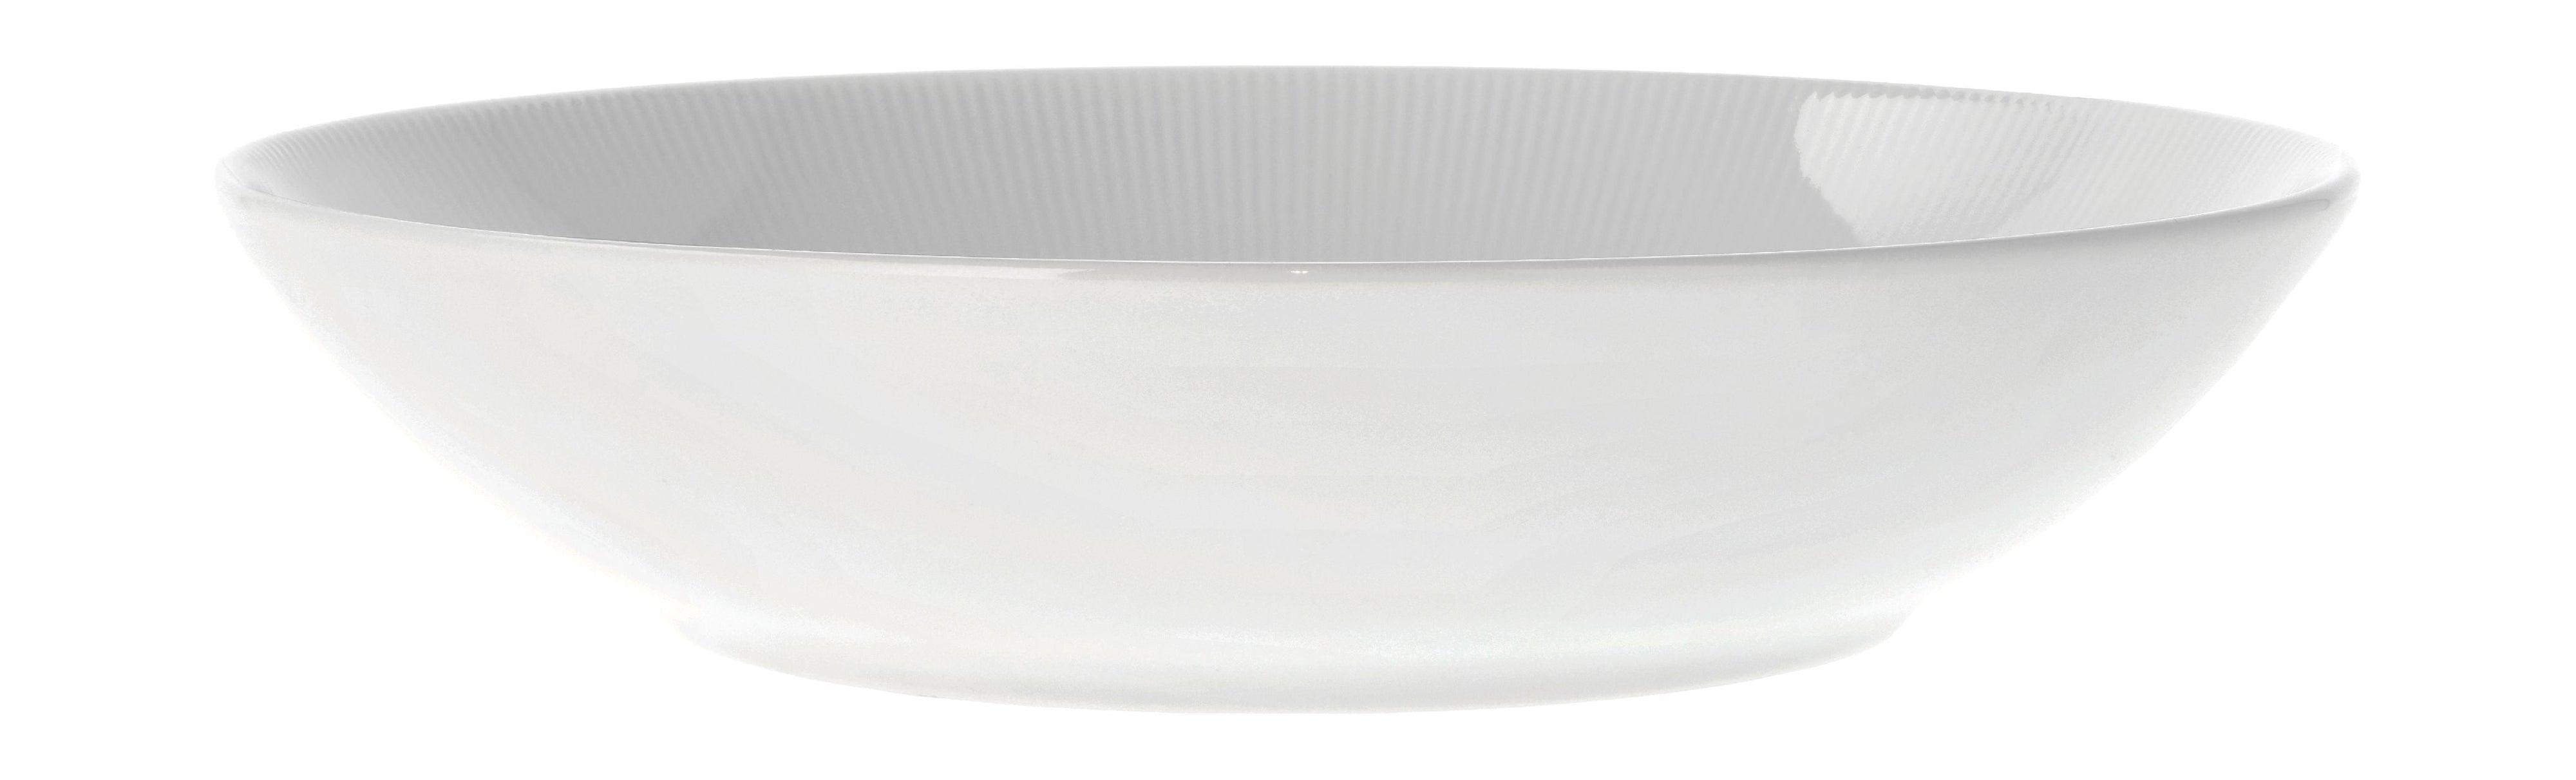 Pillivuyt Eventail Bowl Ø23 cm 0,8 liter, hvid